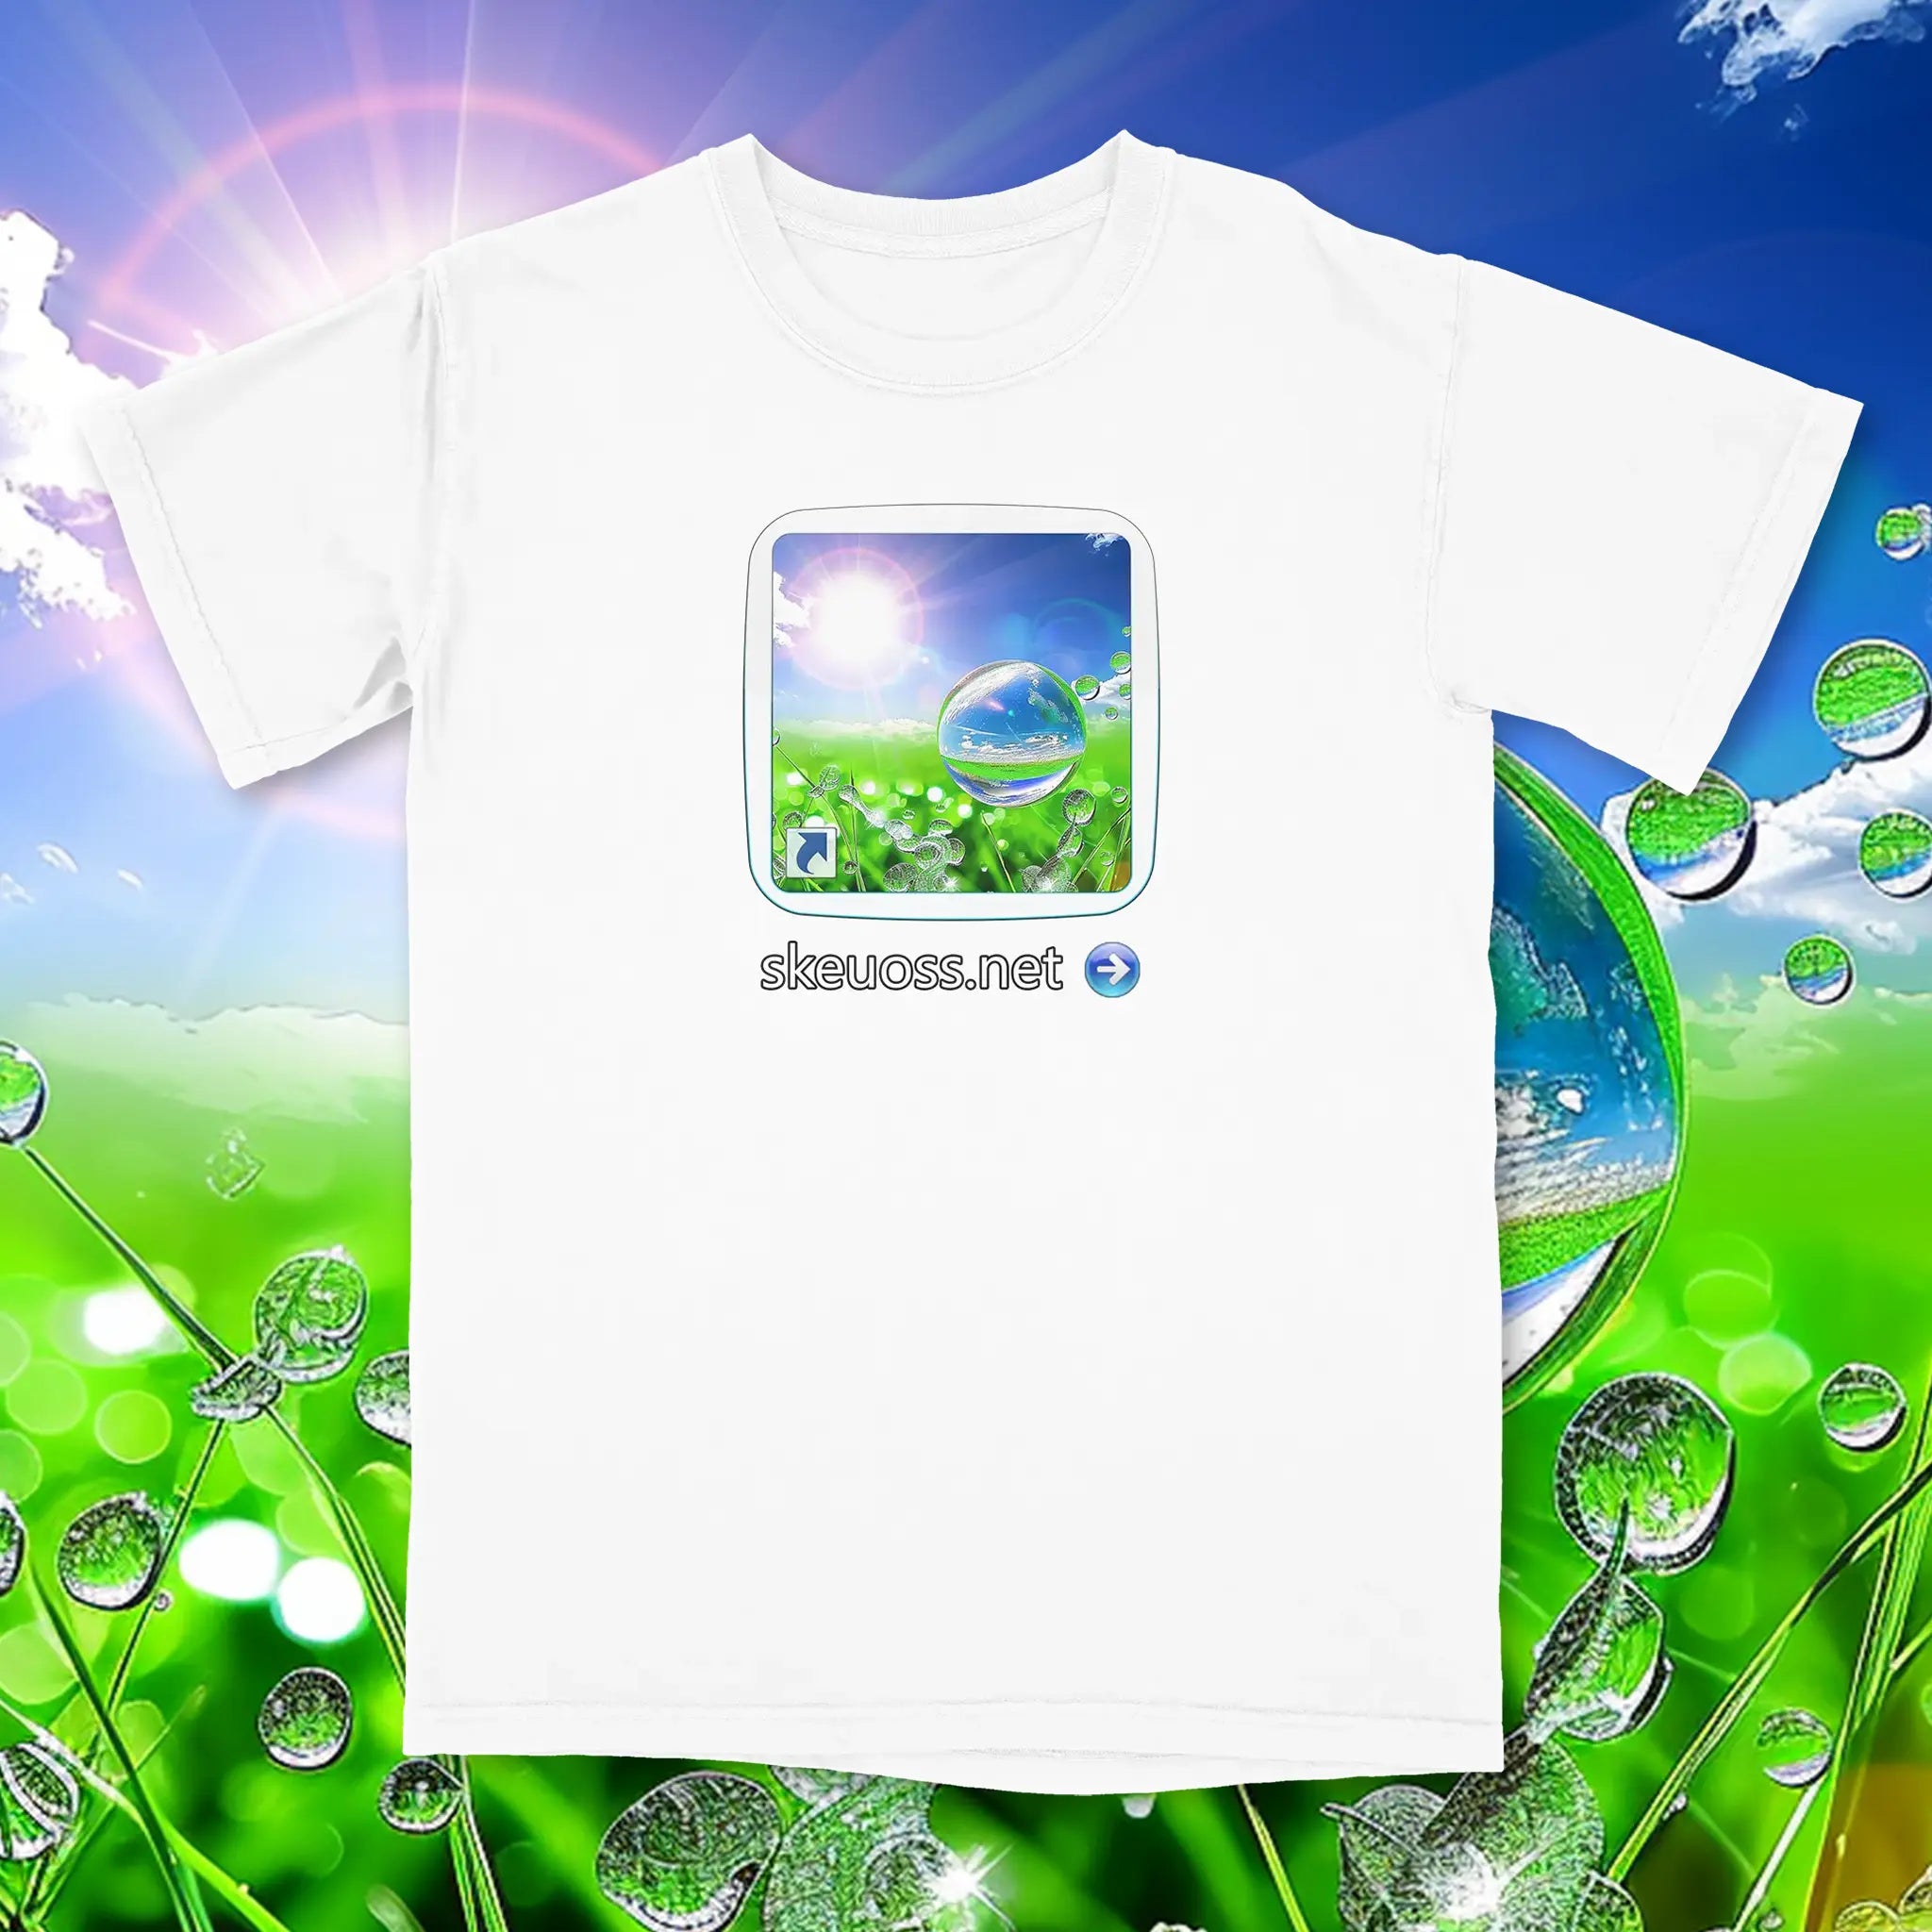 Frutiger Aero T-shirt - User Login Collection - User 264